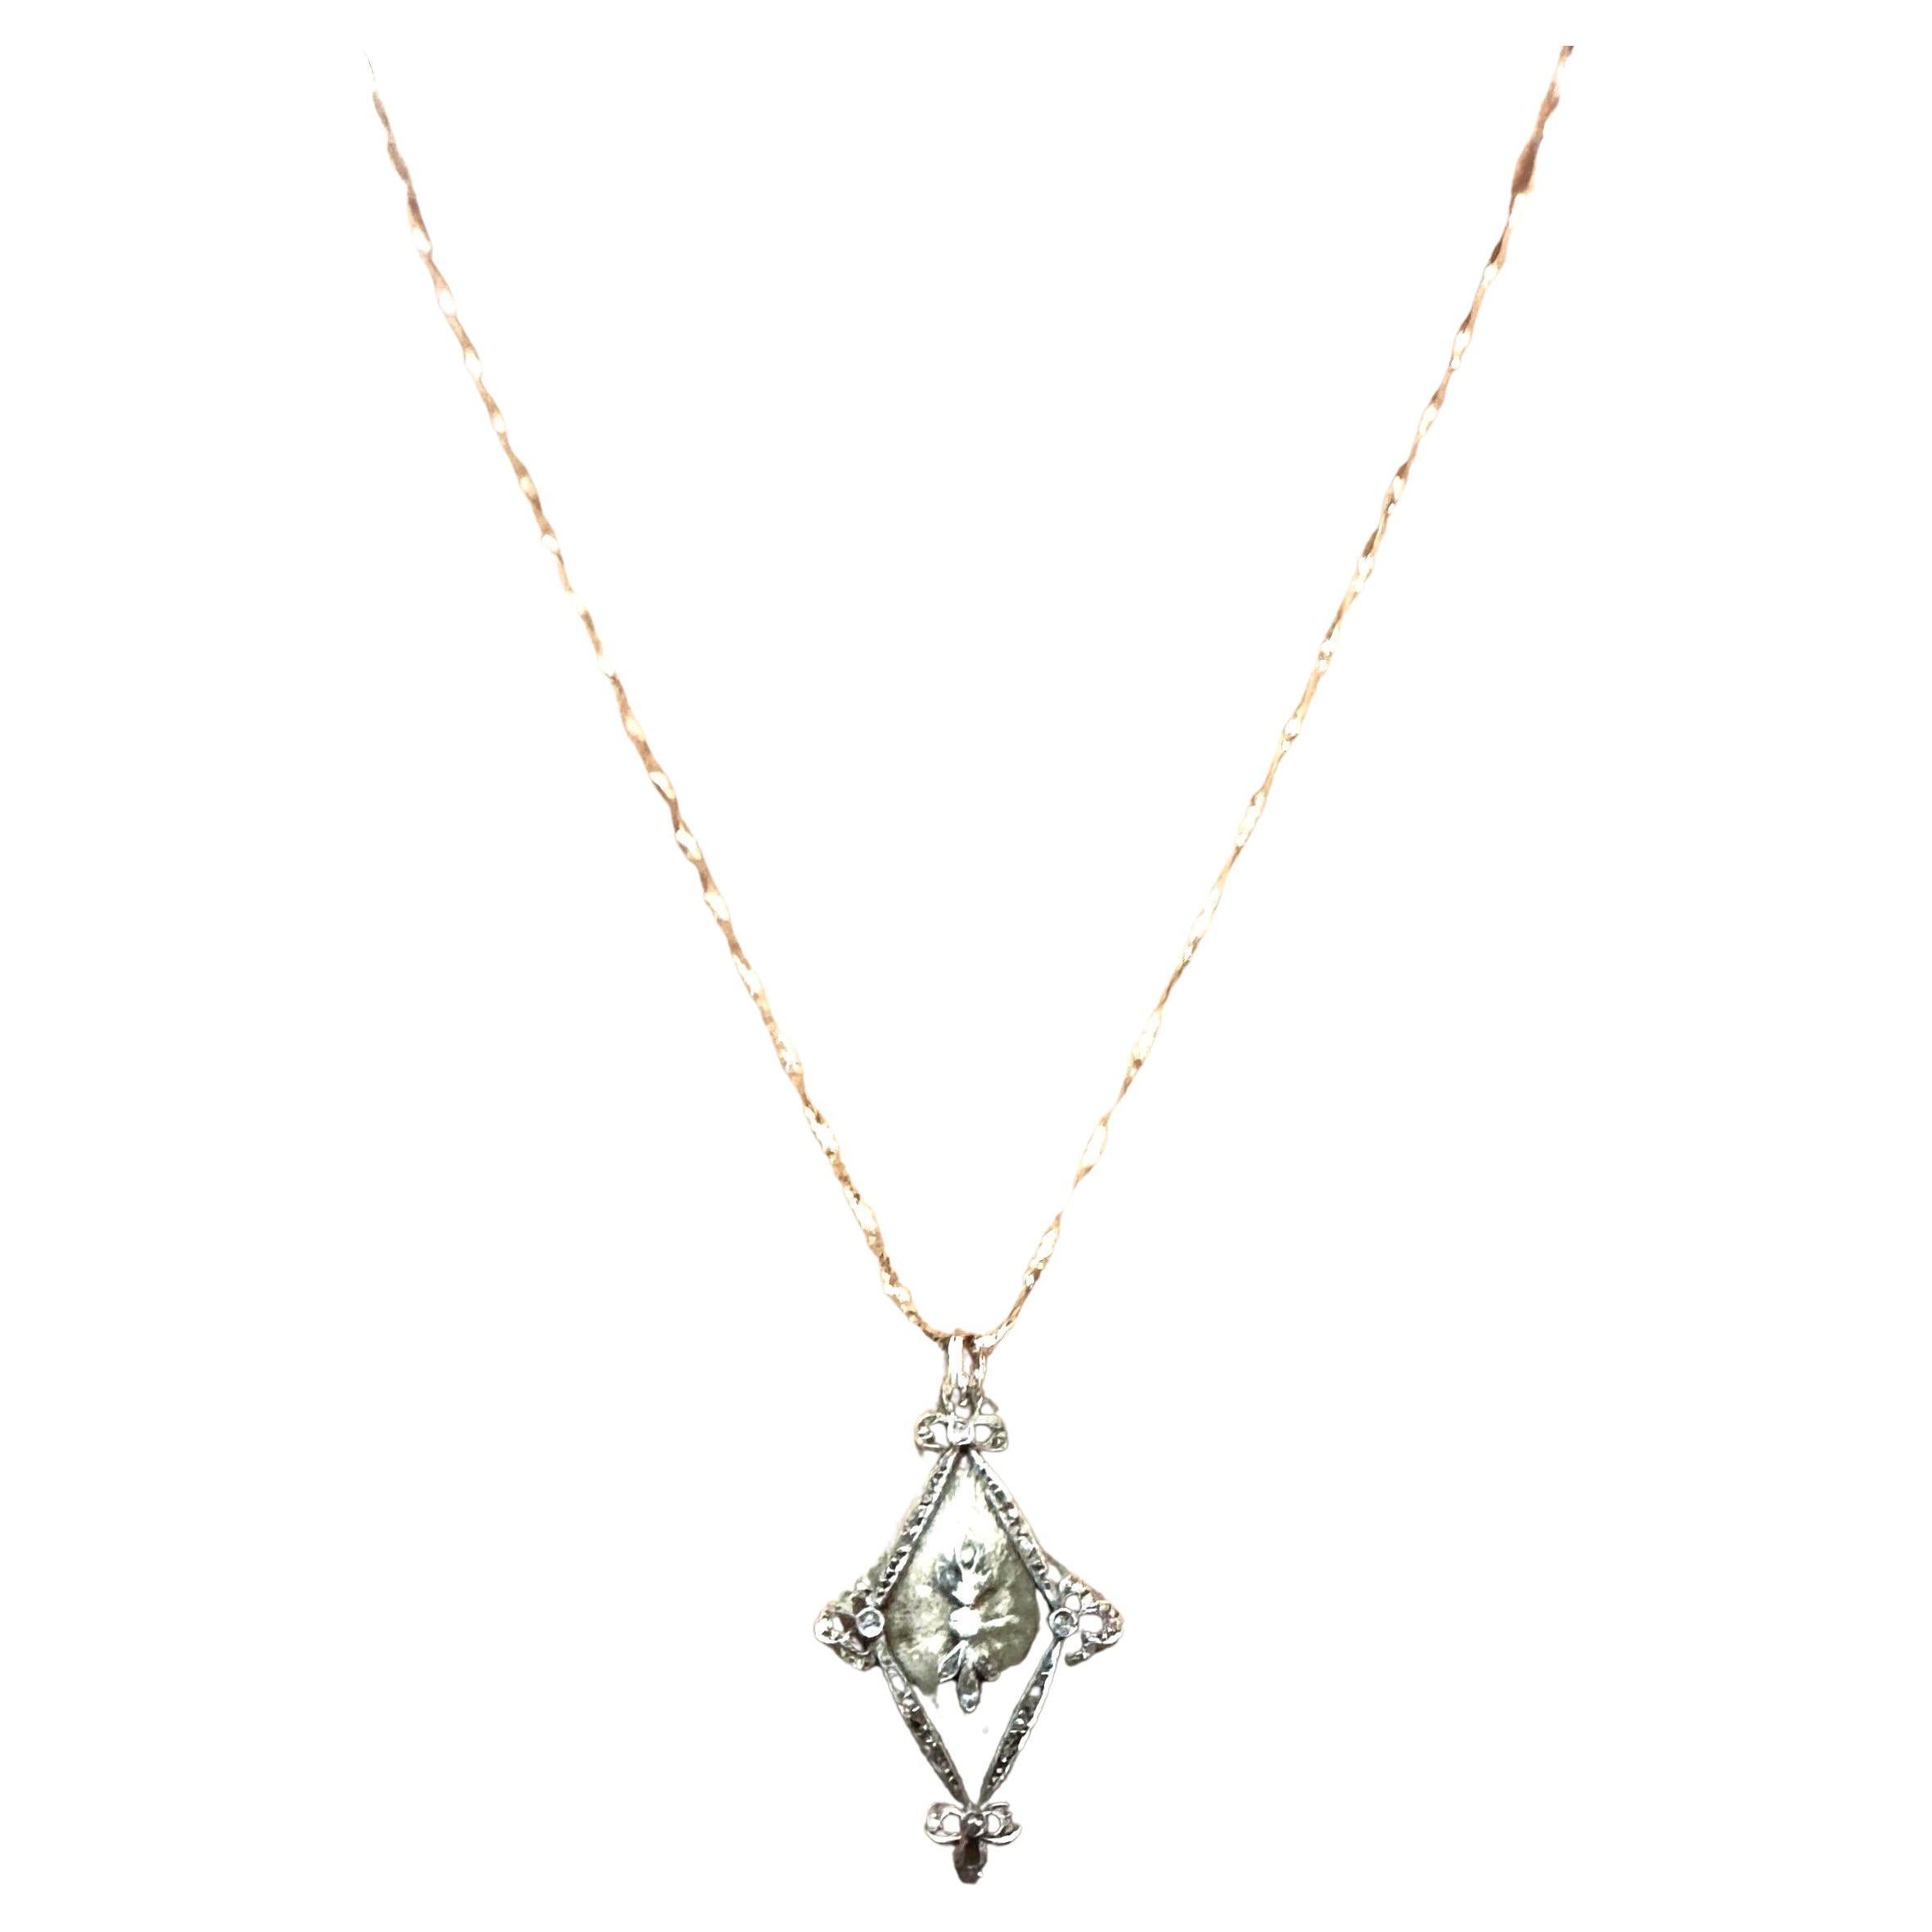 Antique 14k WG Rose Cut & Mine Cut Diamond Pendant w 14k White Gold 18" Chain  For Sale